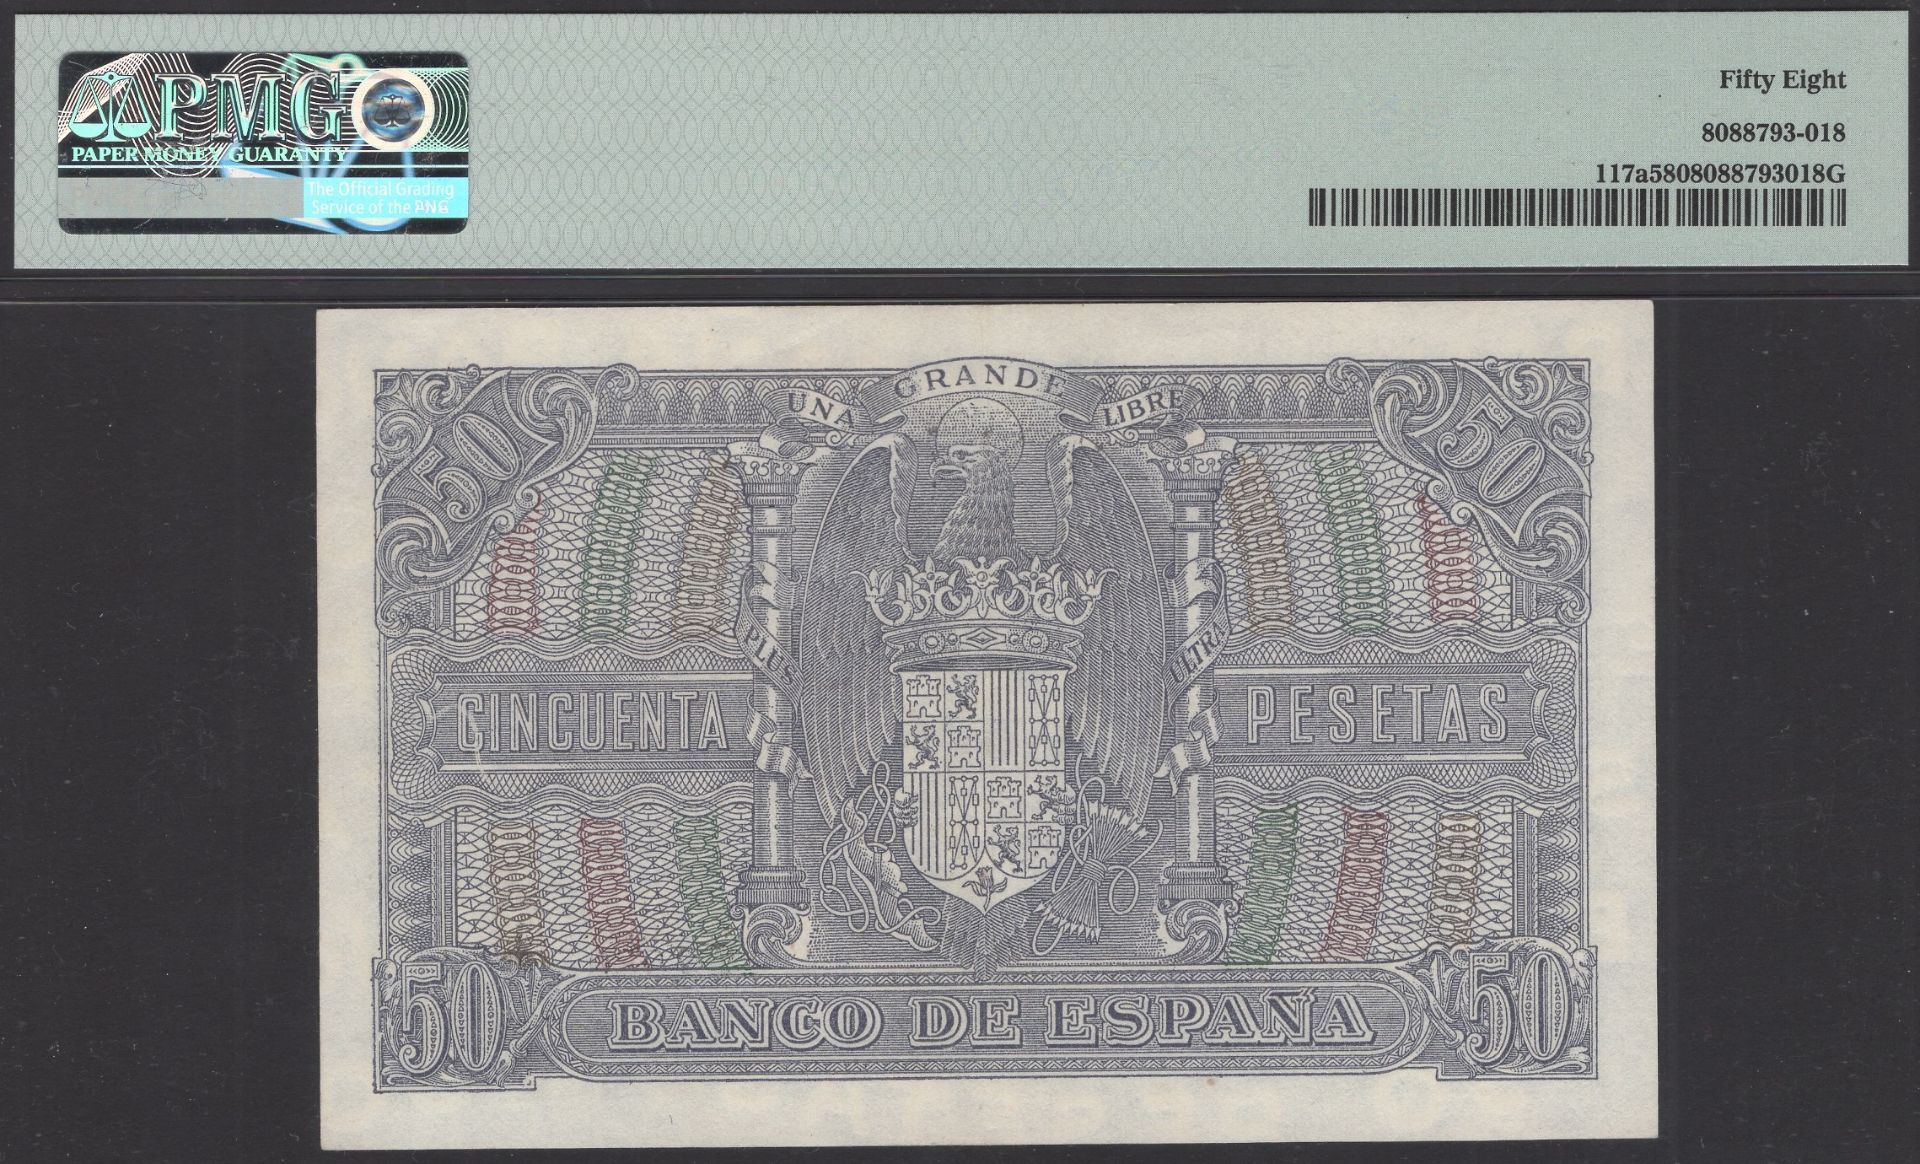 Banco de Espana, 50 Pesetas, 9 January 1940, serial number E 2980701, in PMG holder 58, choi... - Image 2 of 2